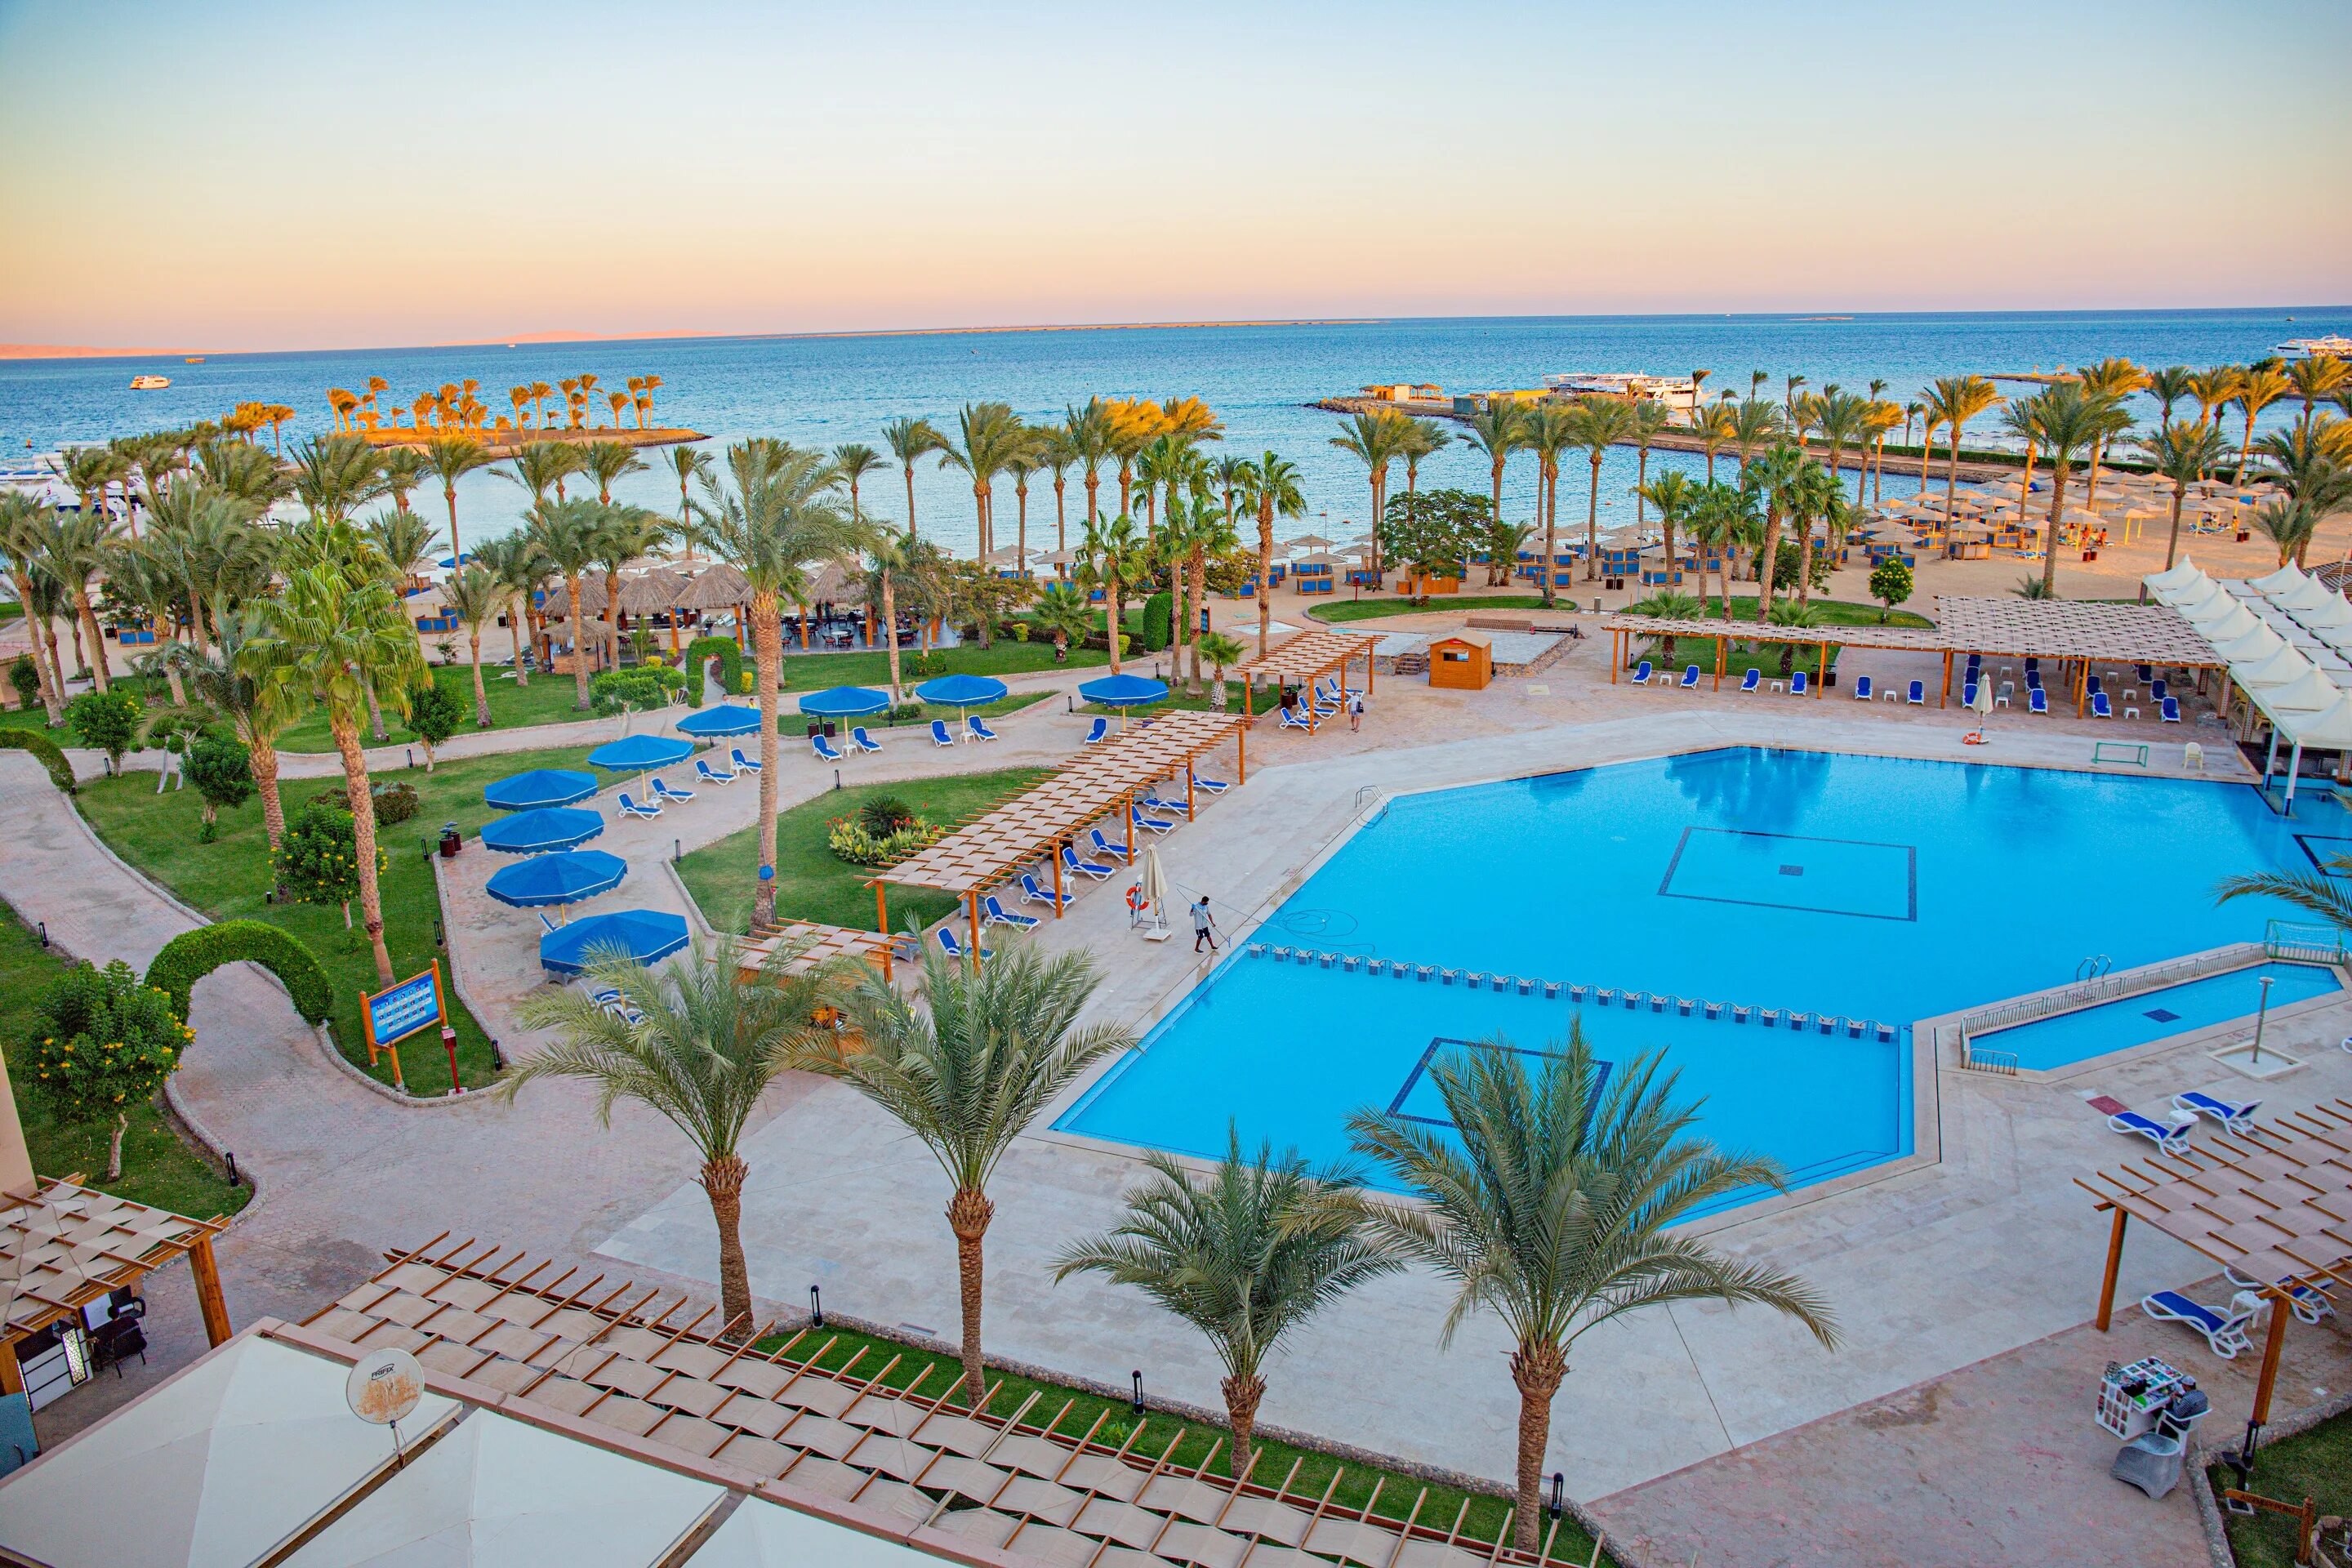 Continental Hotel Hurghada 5. Отель Континенталь Хургада 5 звезд все включено. Солнечный Египет. Голден Файв Хургада.